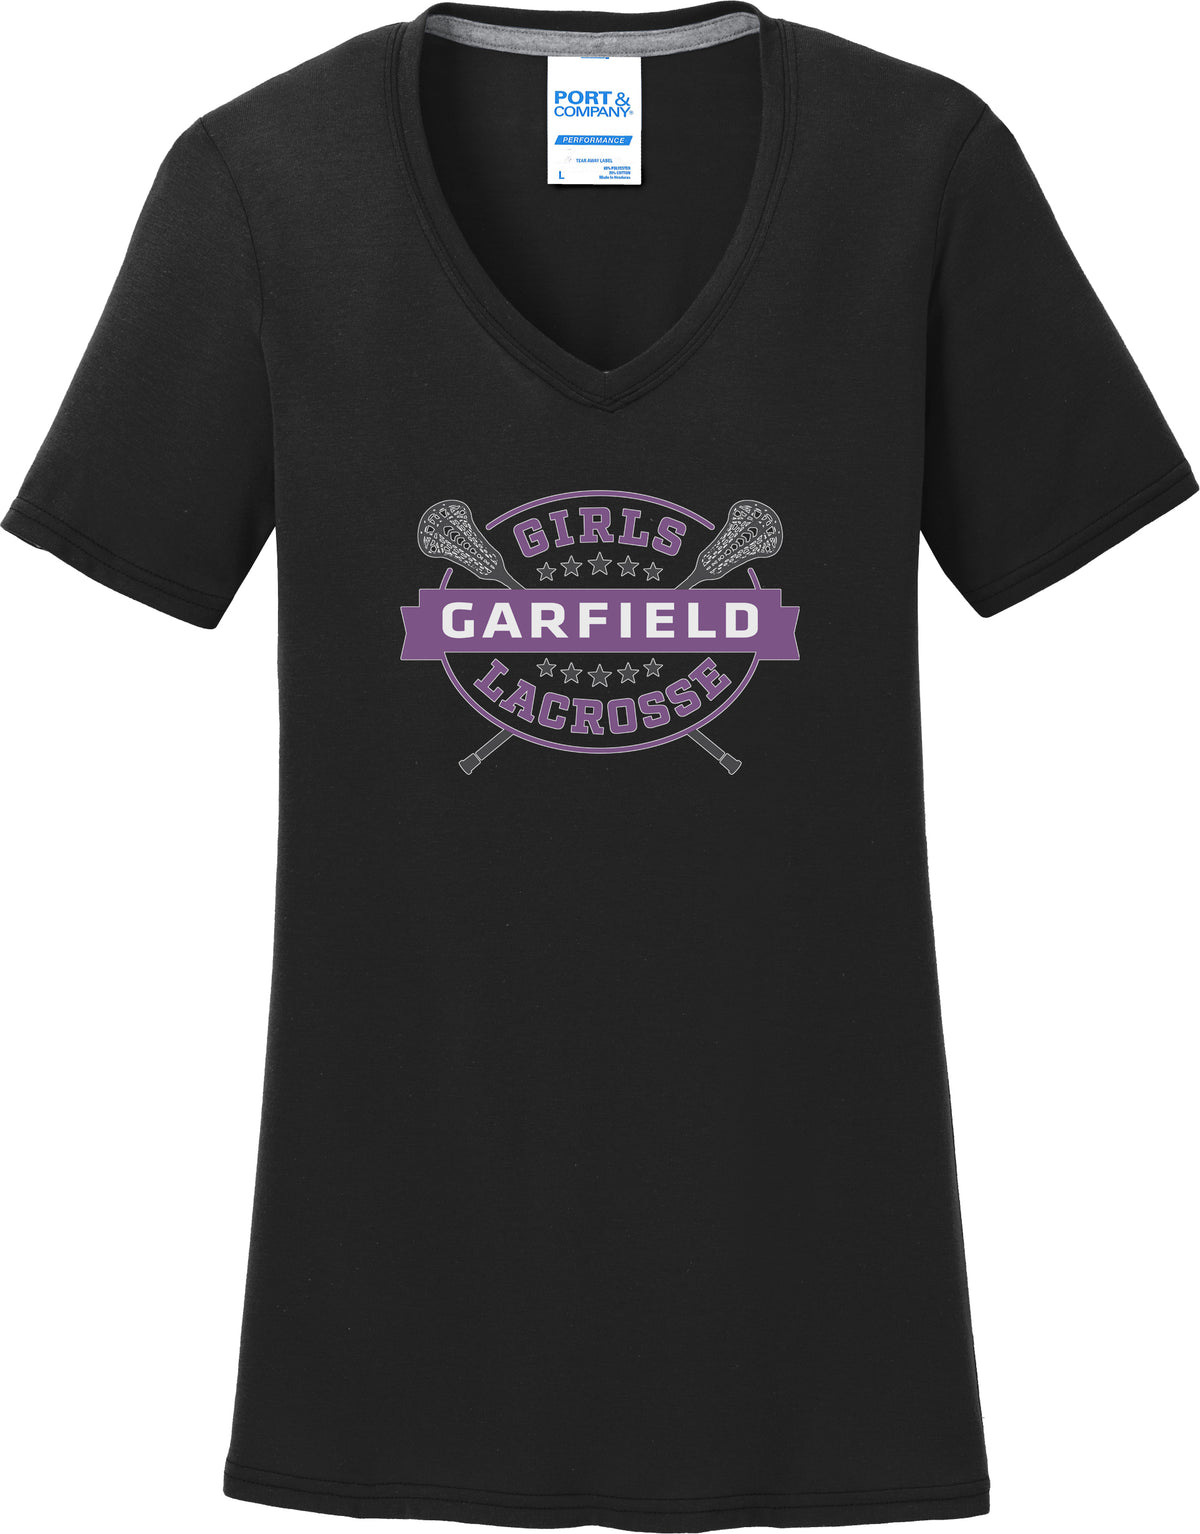 Garfield Women's Black T-Shirt